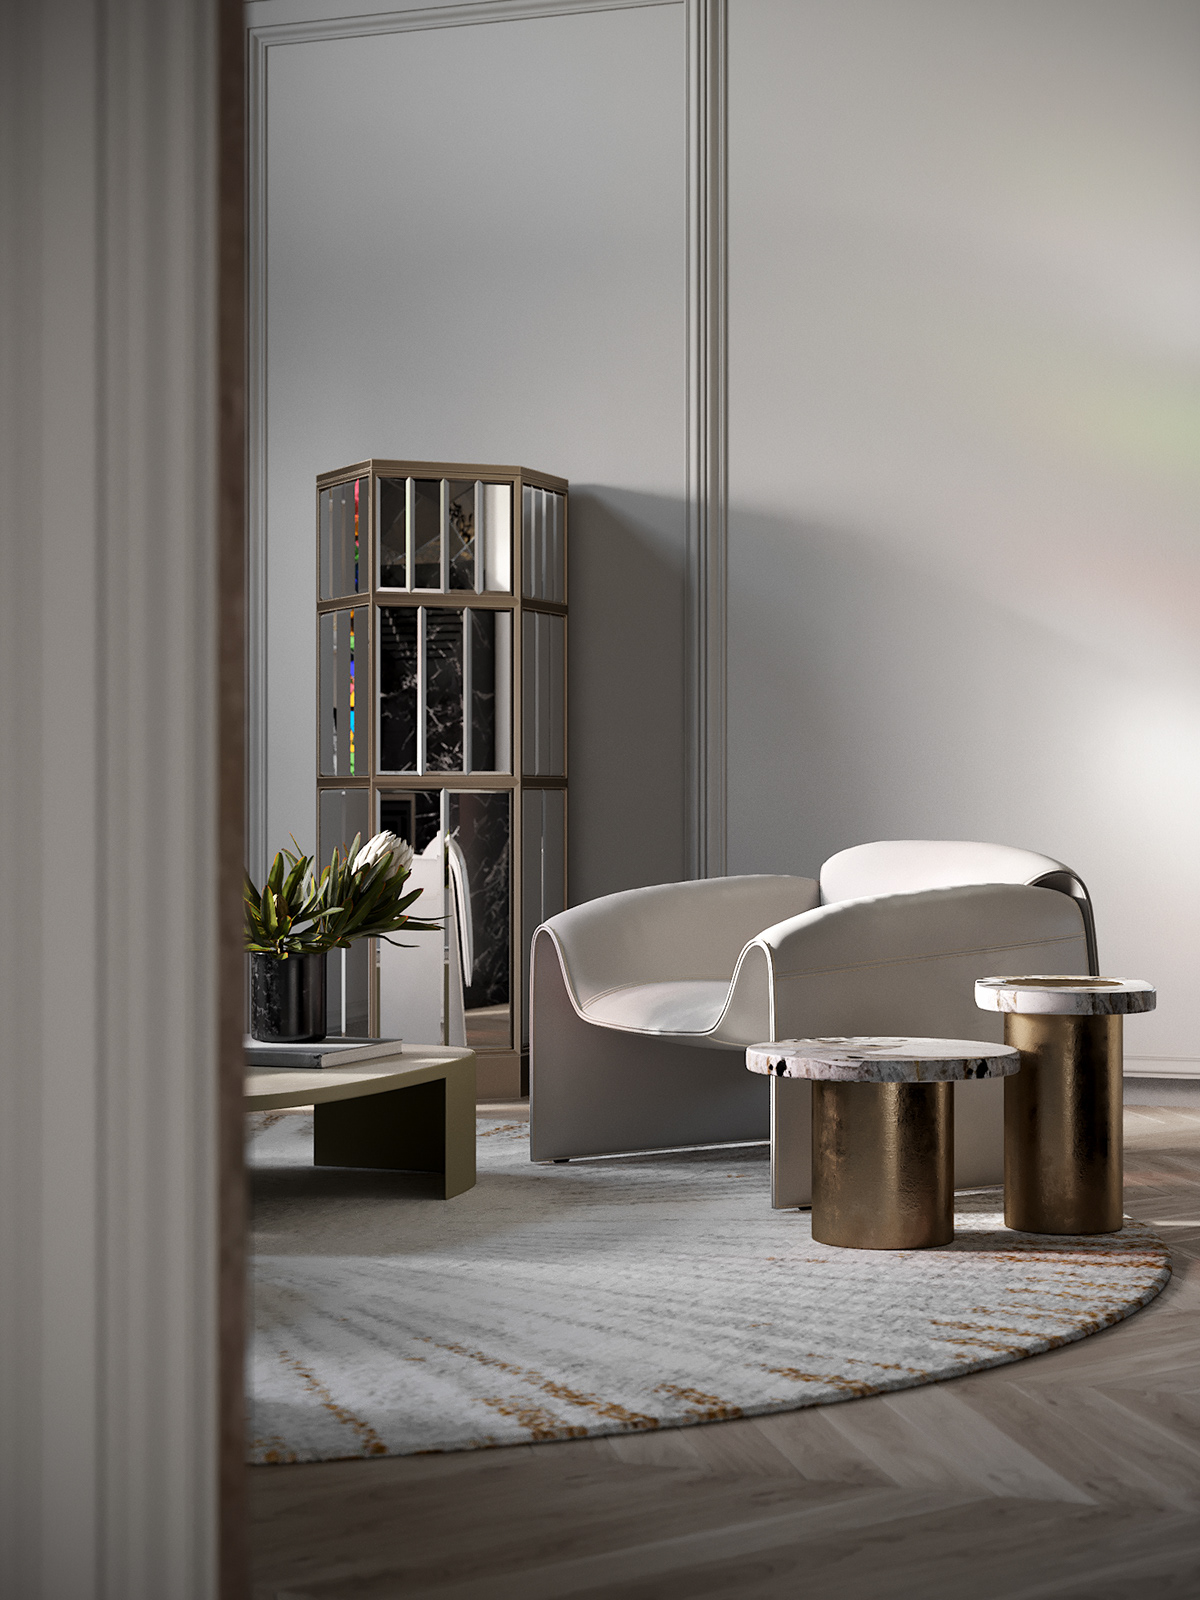 3dmax corona render  interior design  living room Render visualization